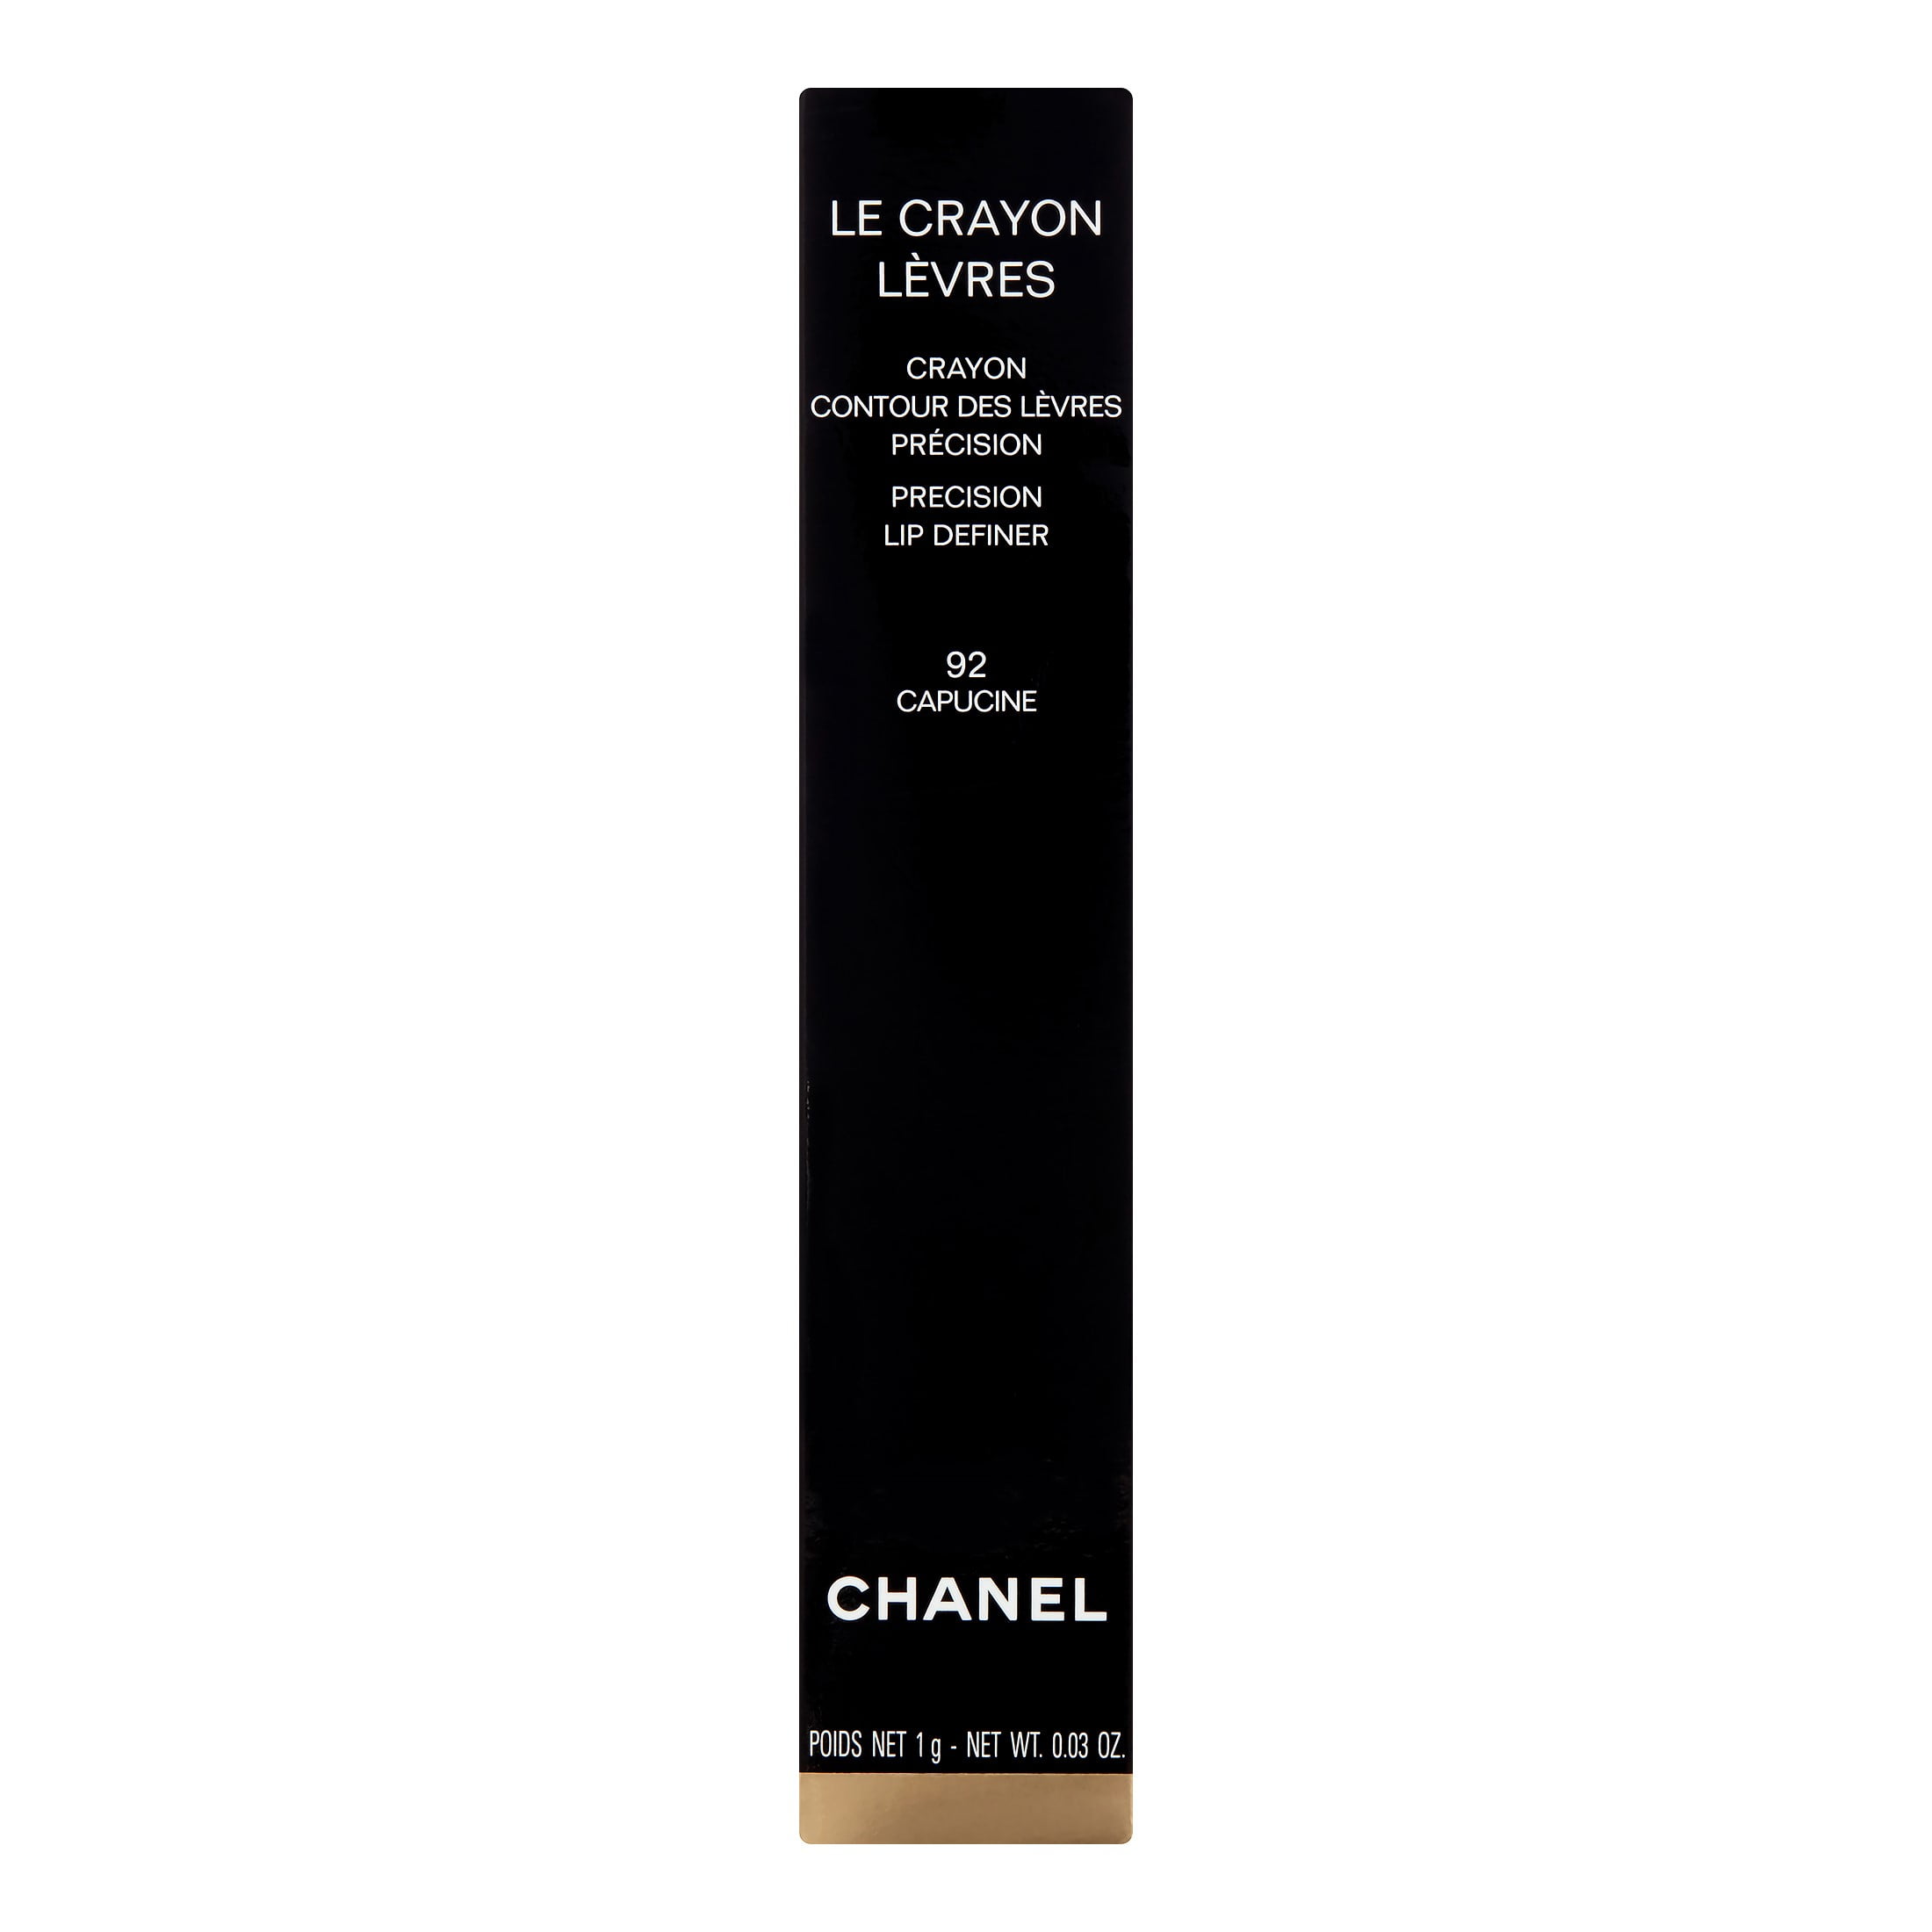 Le Crayon Levres - 92 Capucine by Chanel for Women - 0.03 oz Lipliner